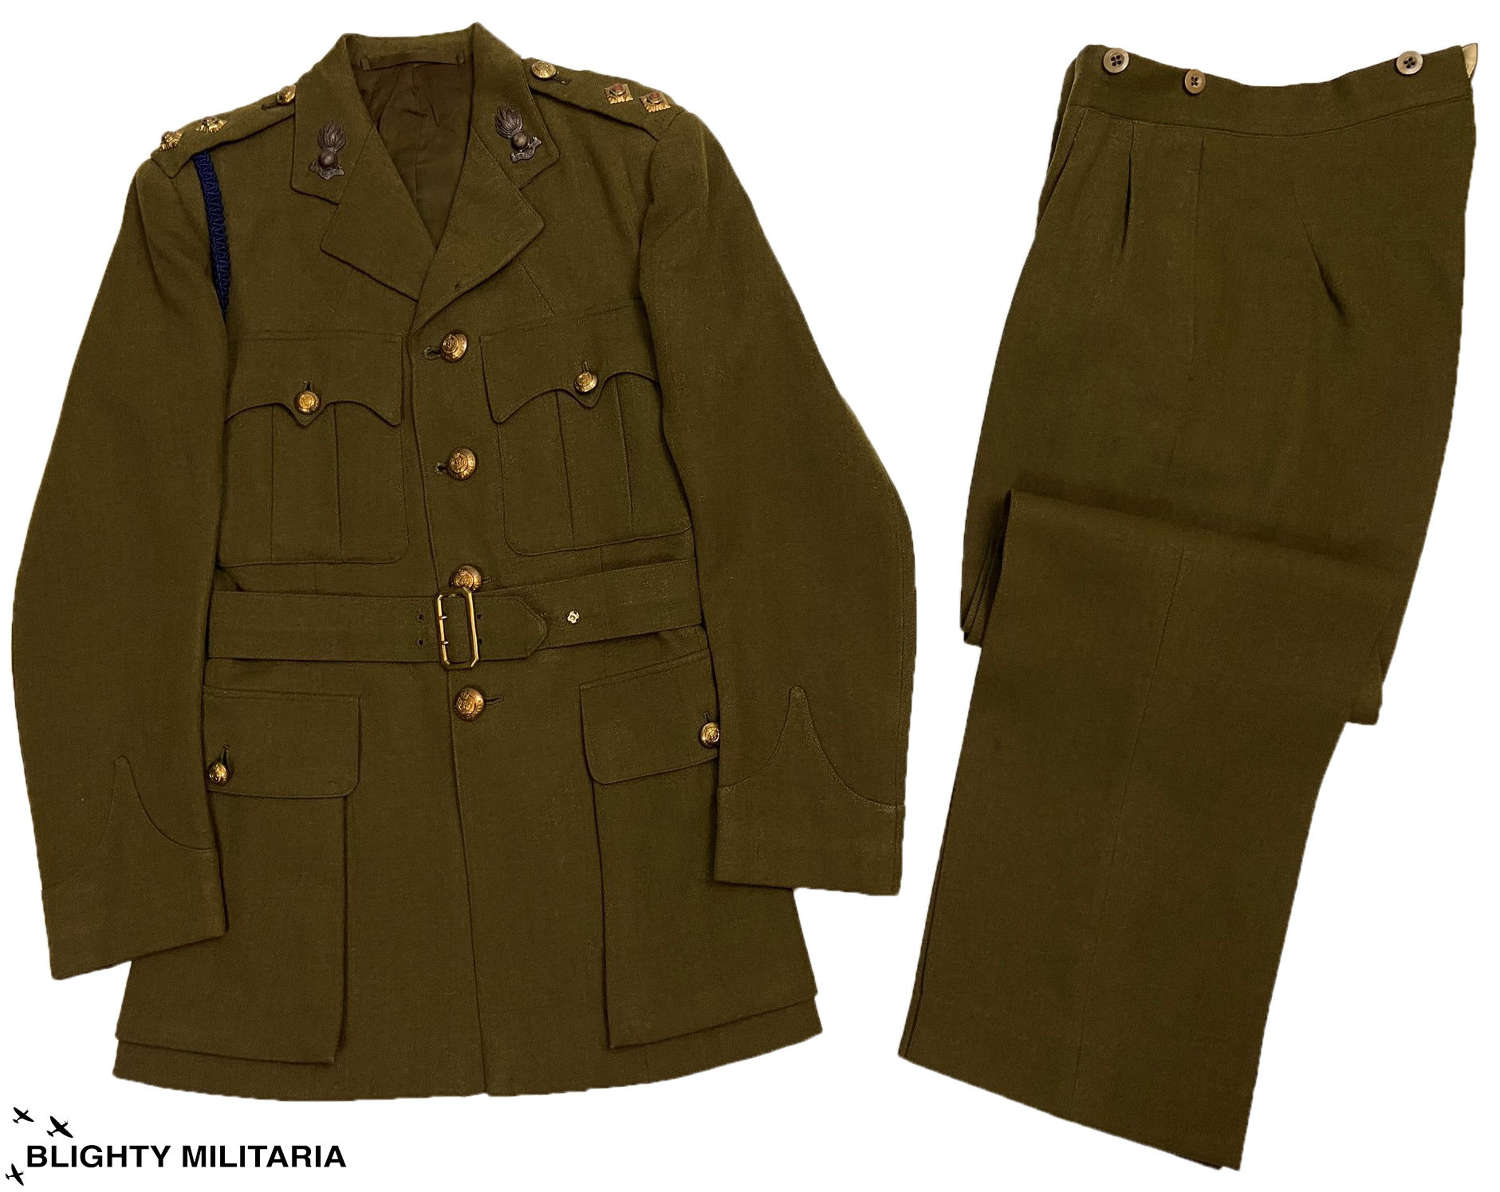 Original 1948 Dated British Army Officer's Service Dress Uniform